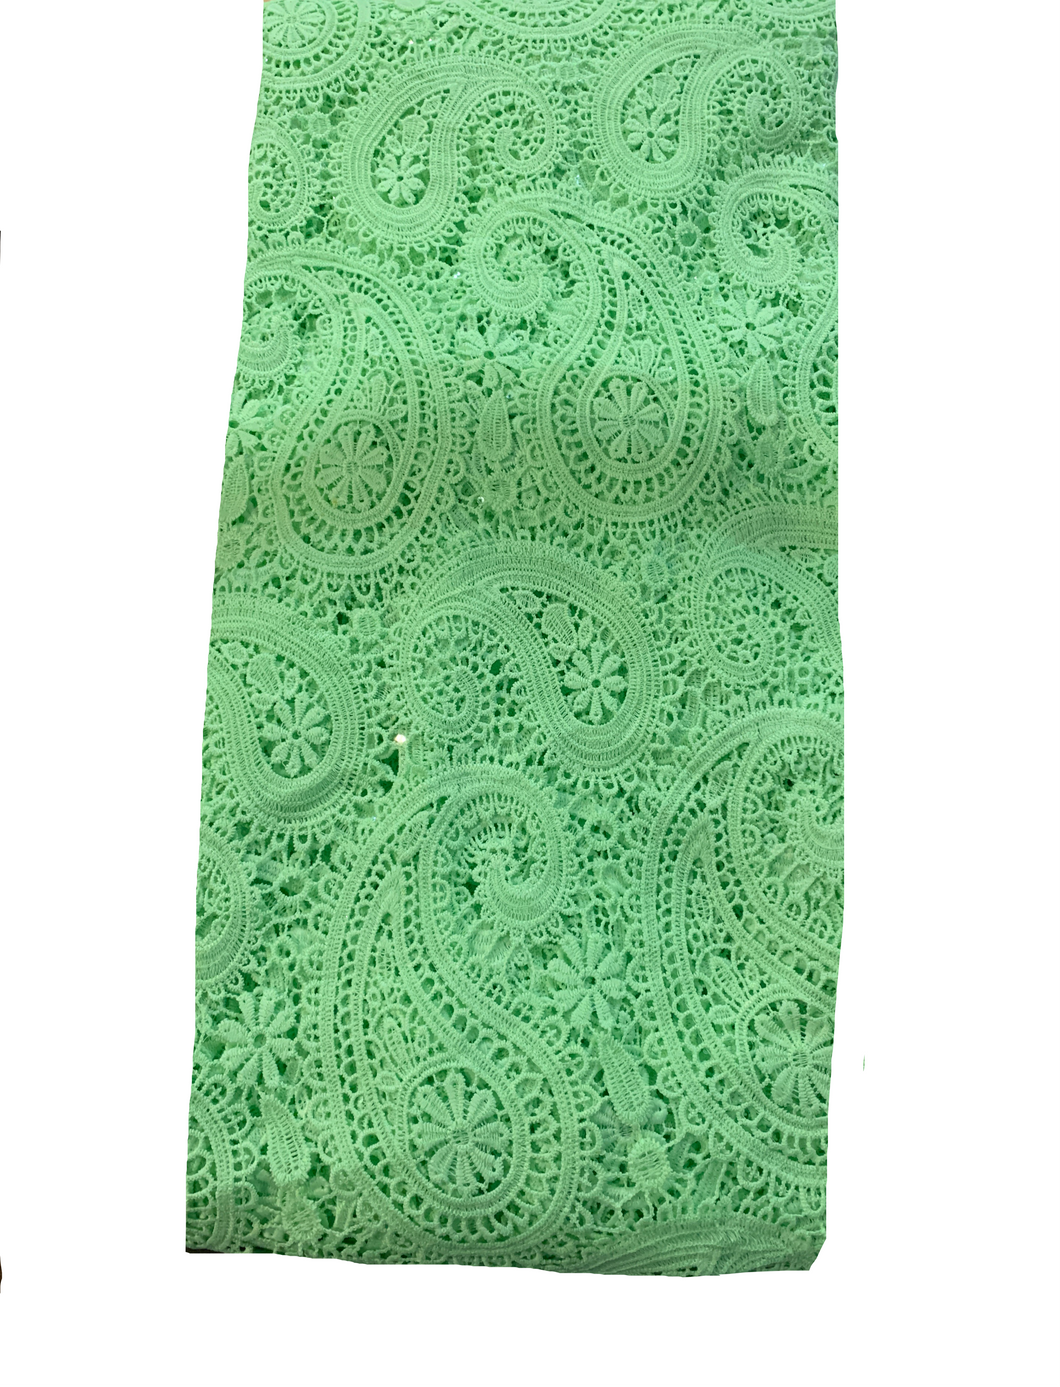 Soft Green Lace Fabric